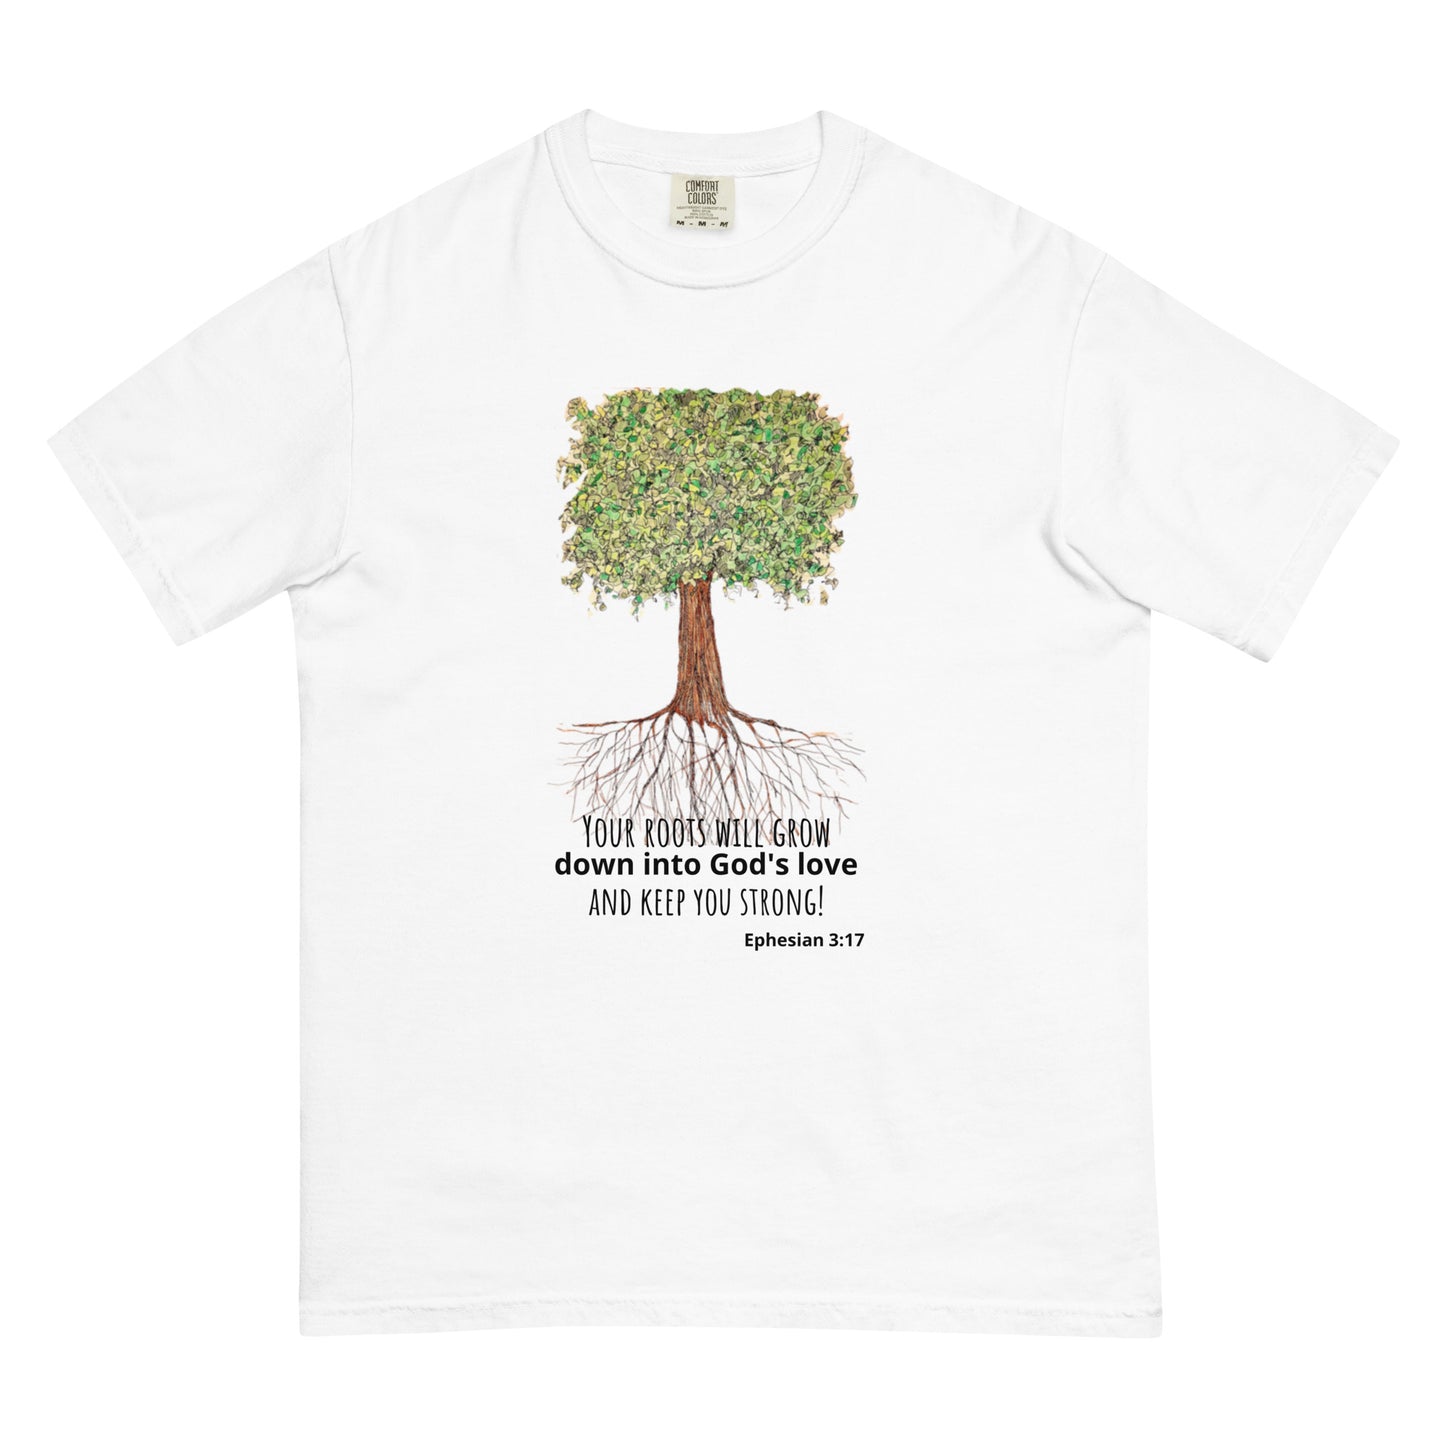 God Said "Roots will Grow" Unisex garment-dyed heavyweight t-shirt